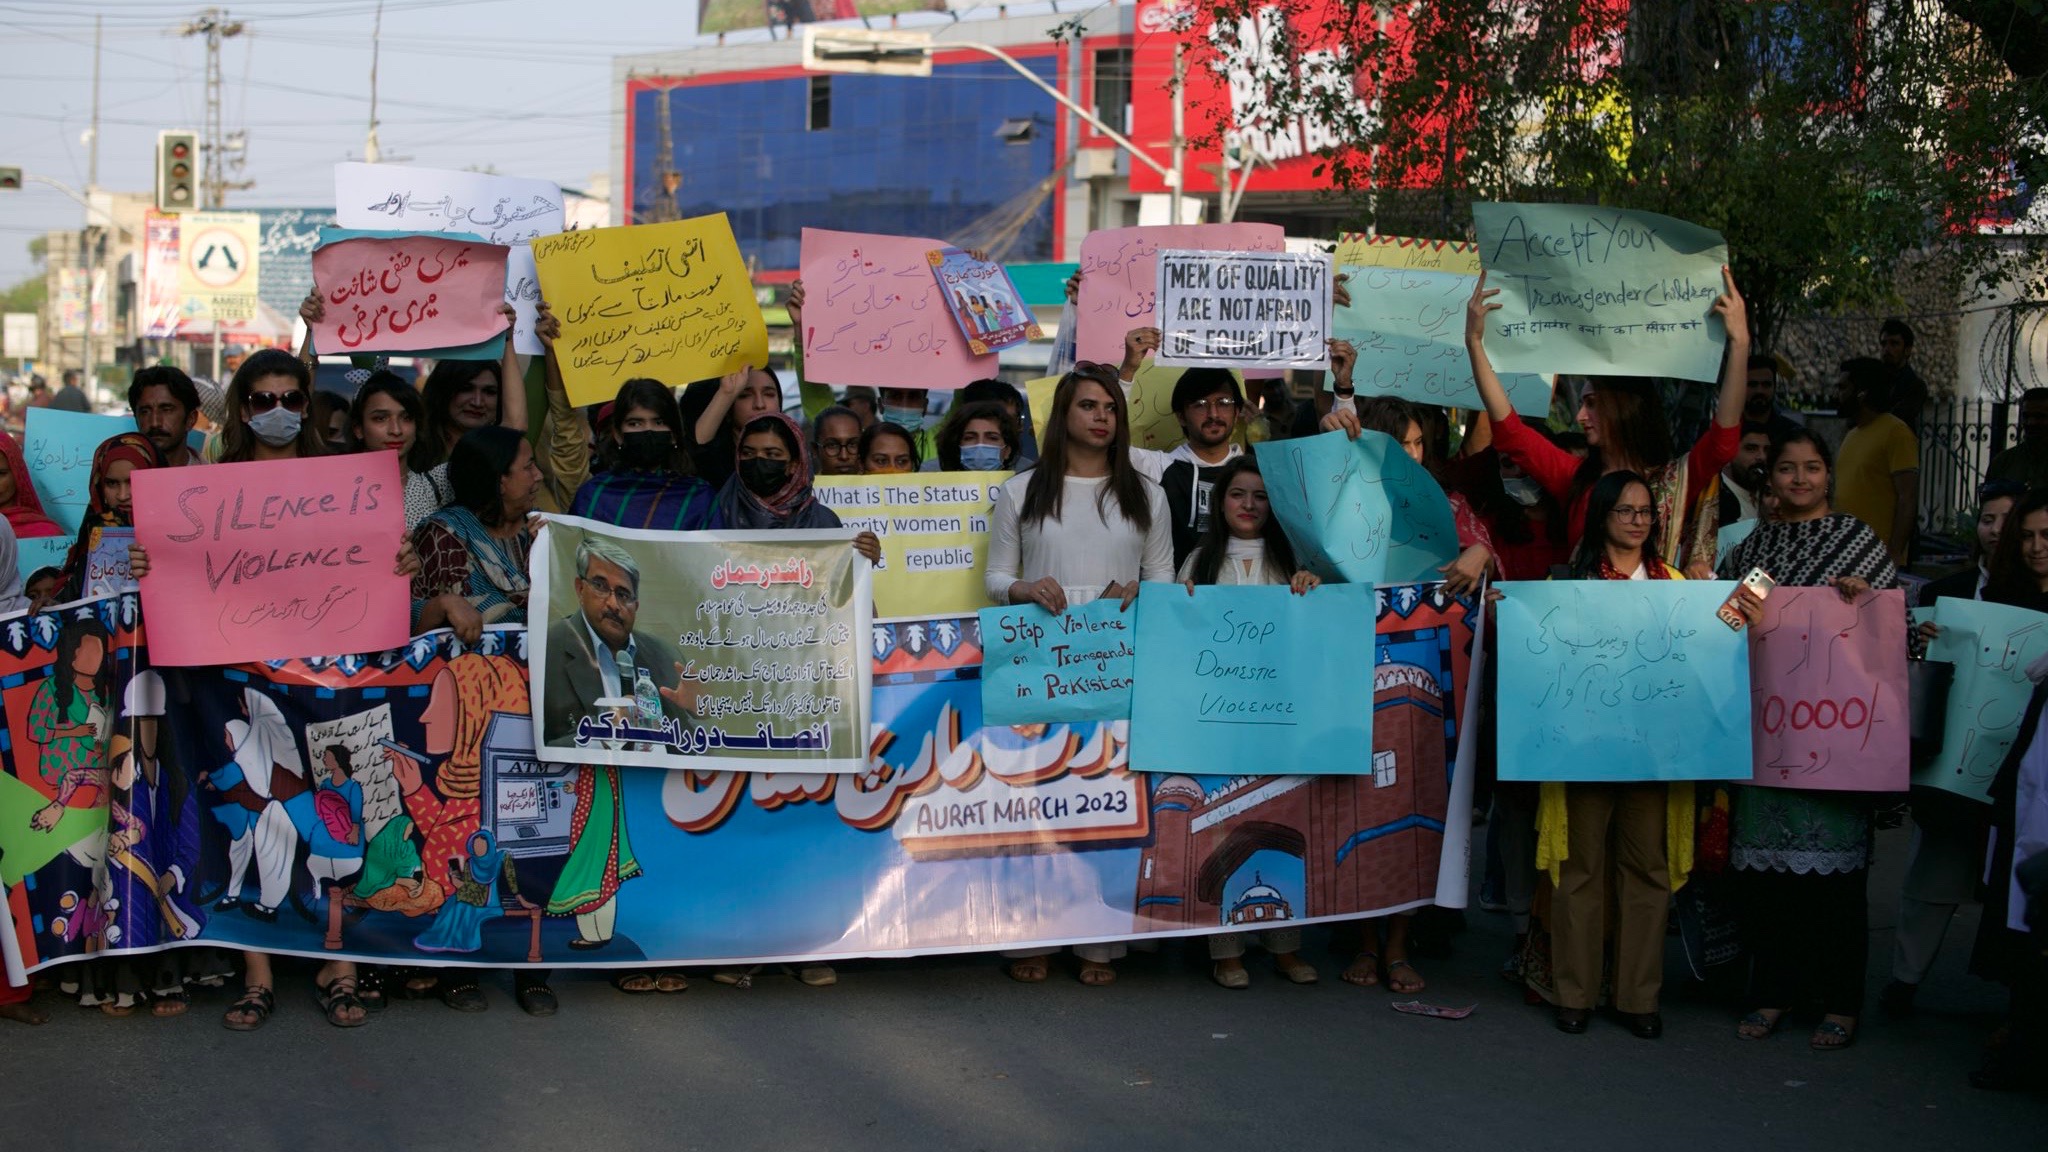 Aurat march Pakistan women's rights